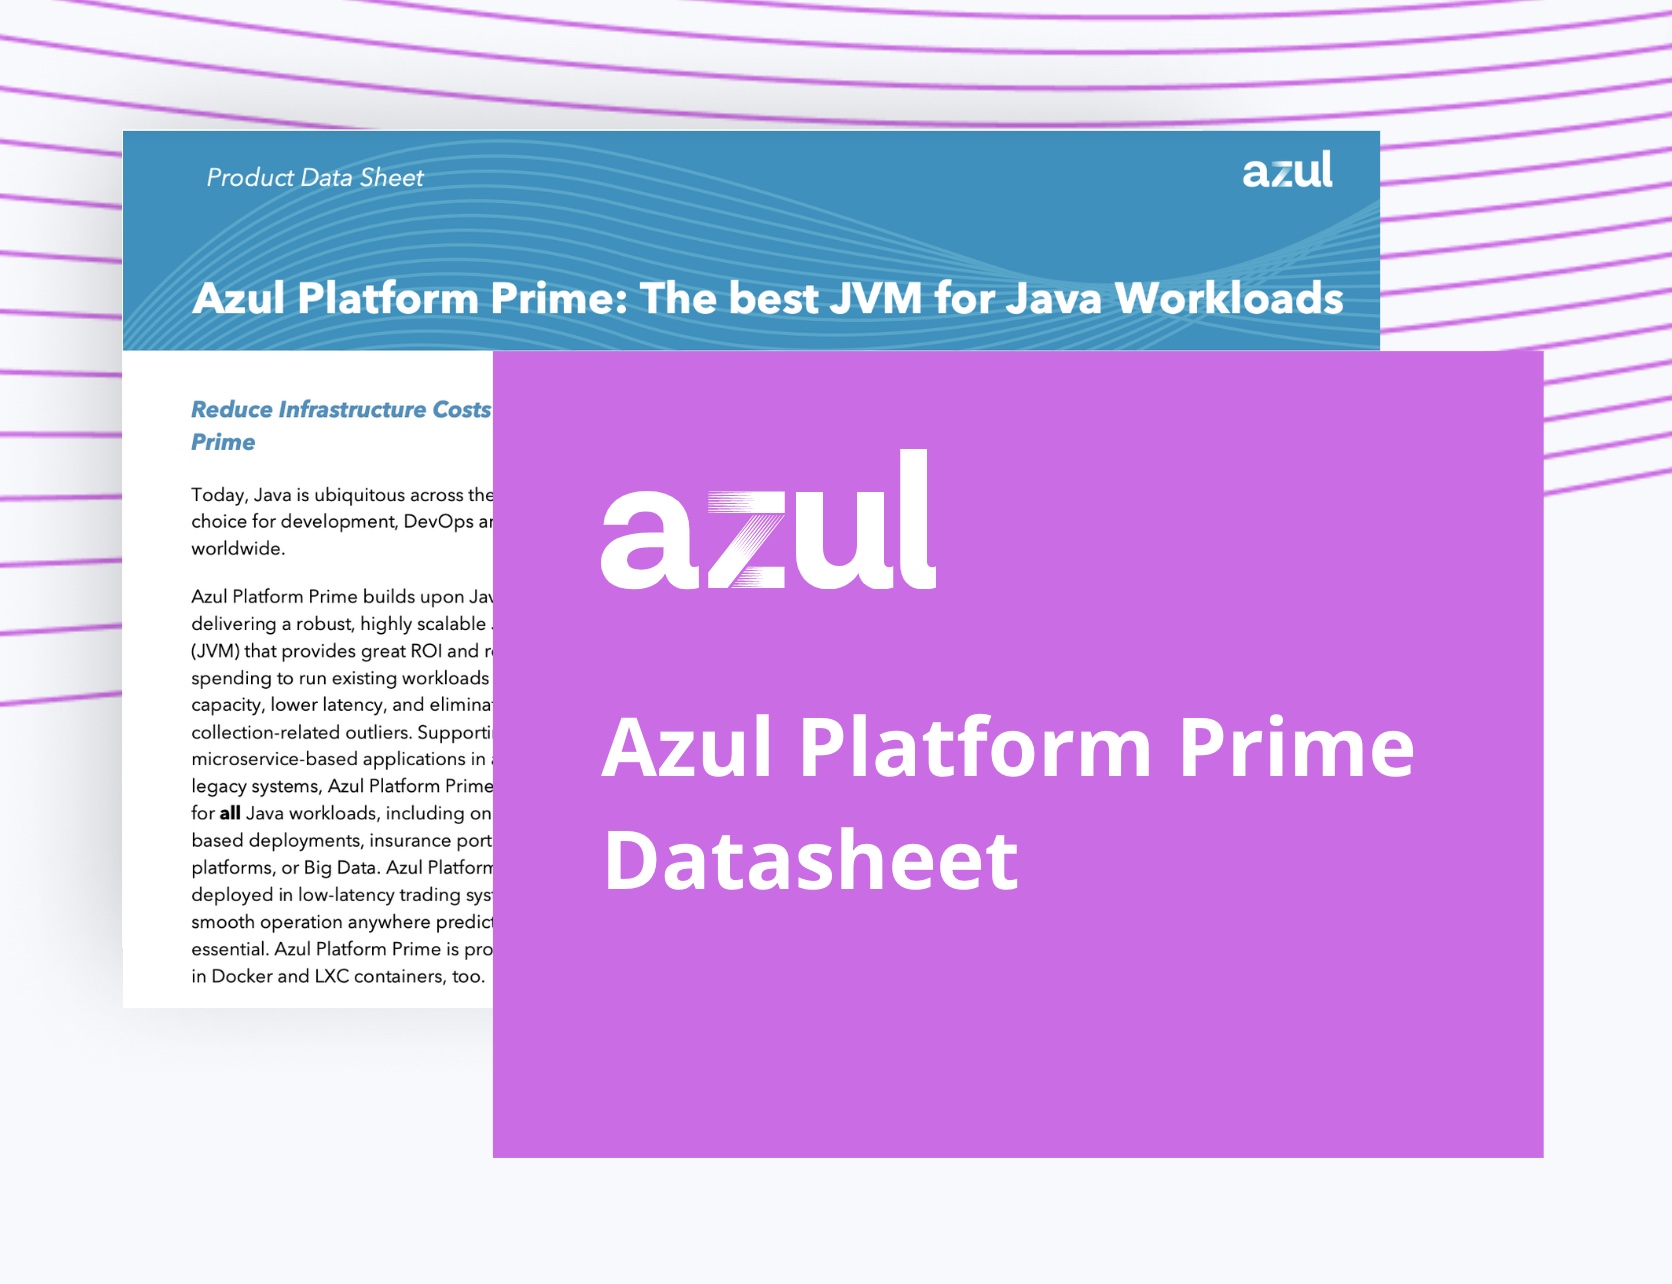 Azul Platform Prime Datasheet